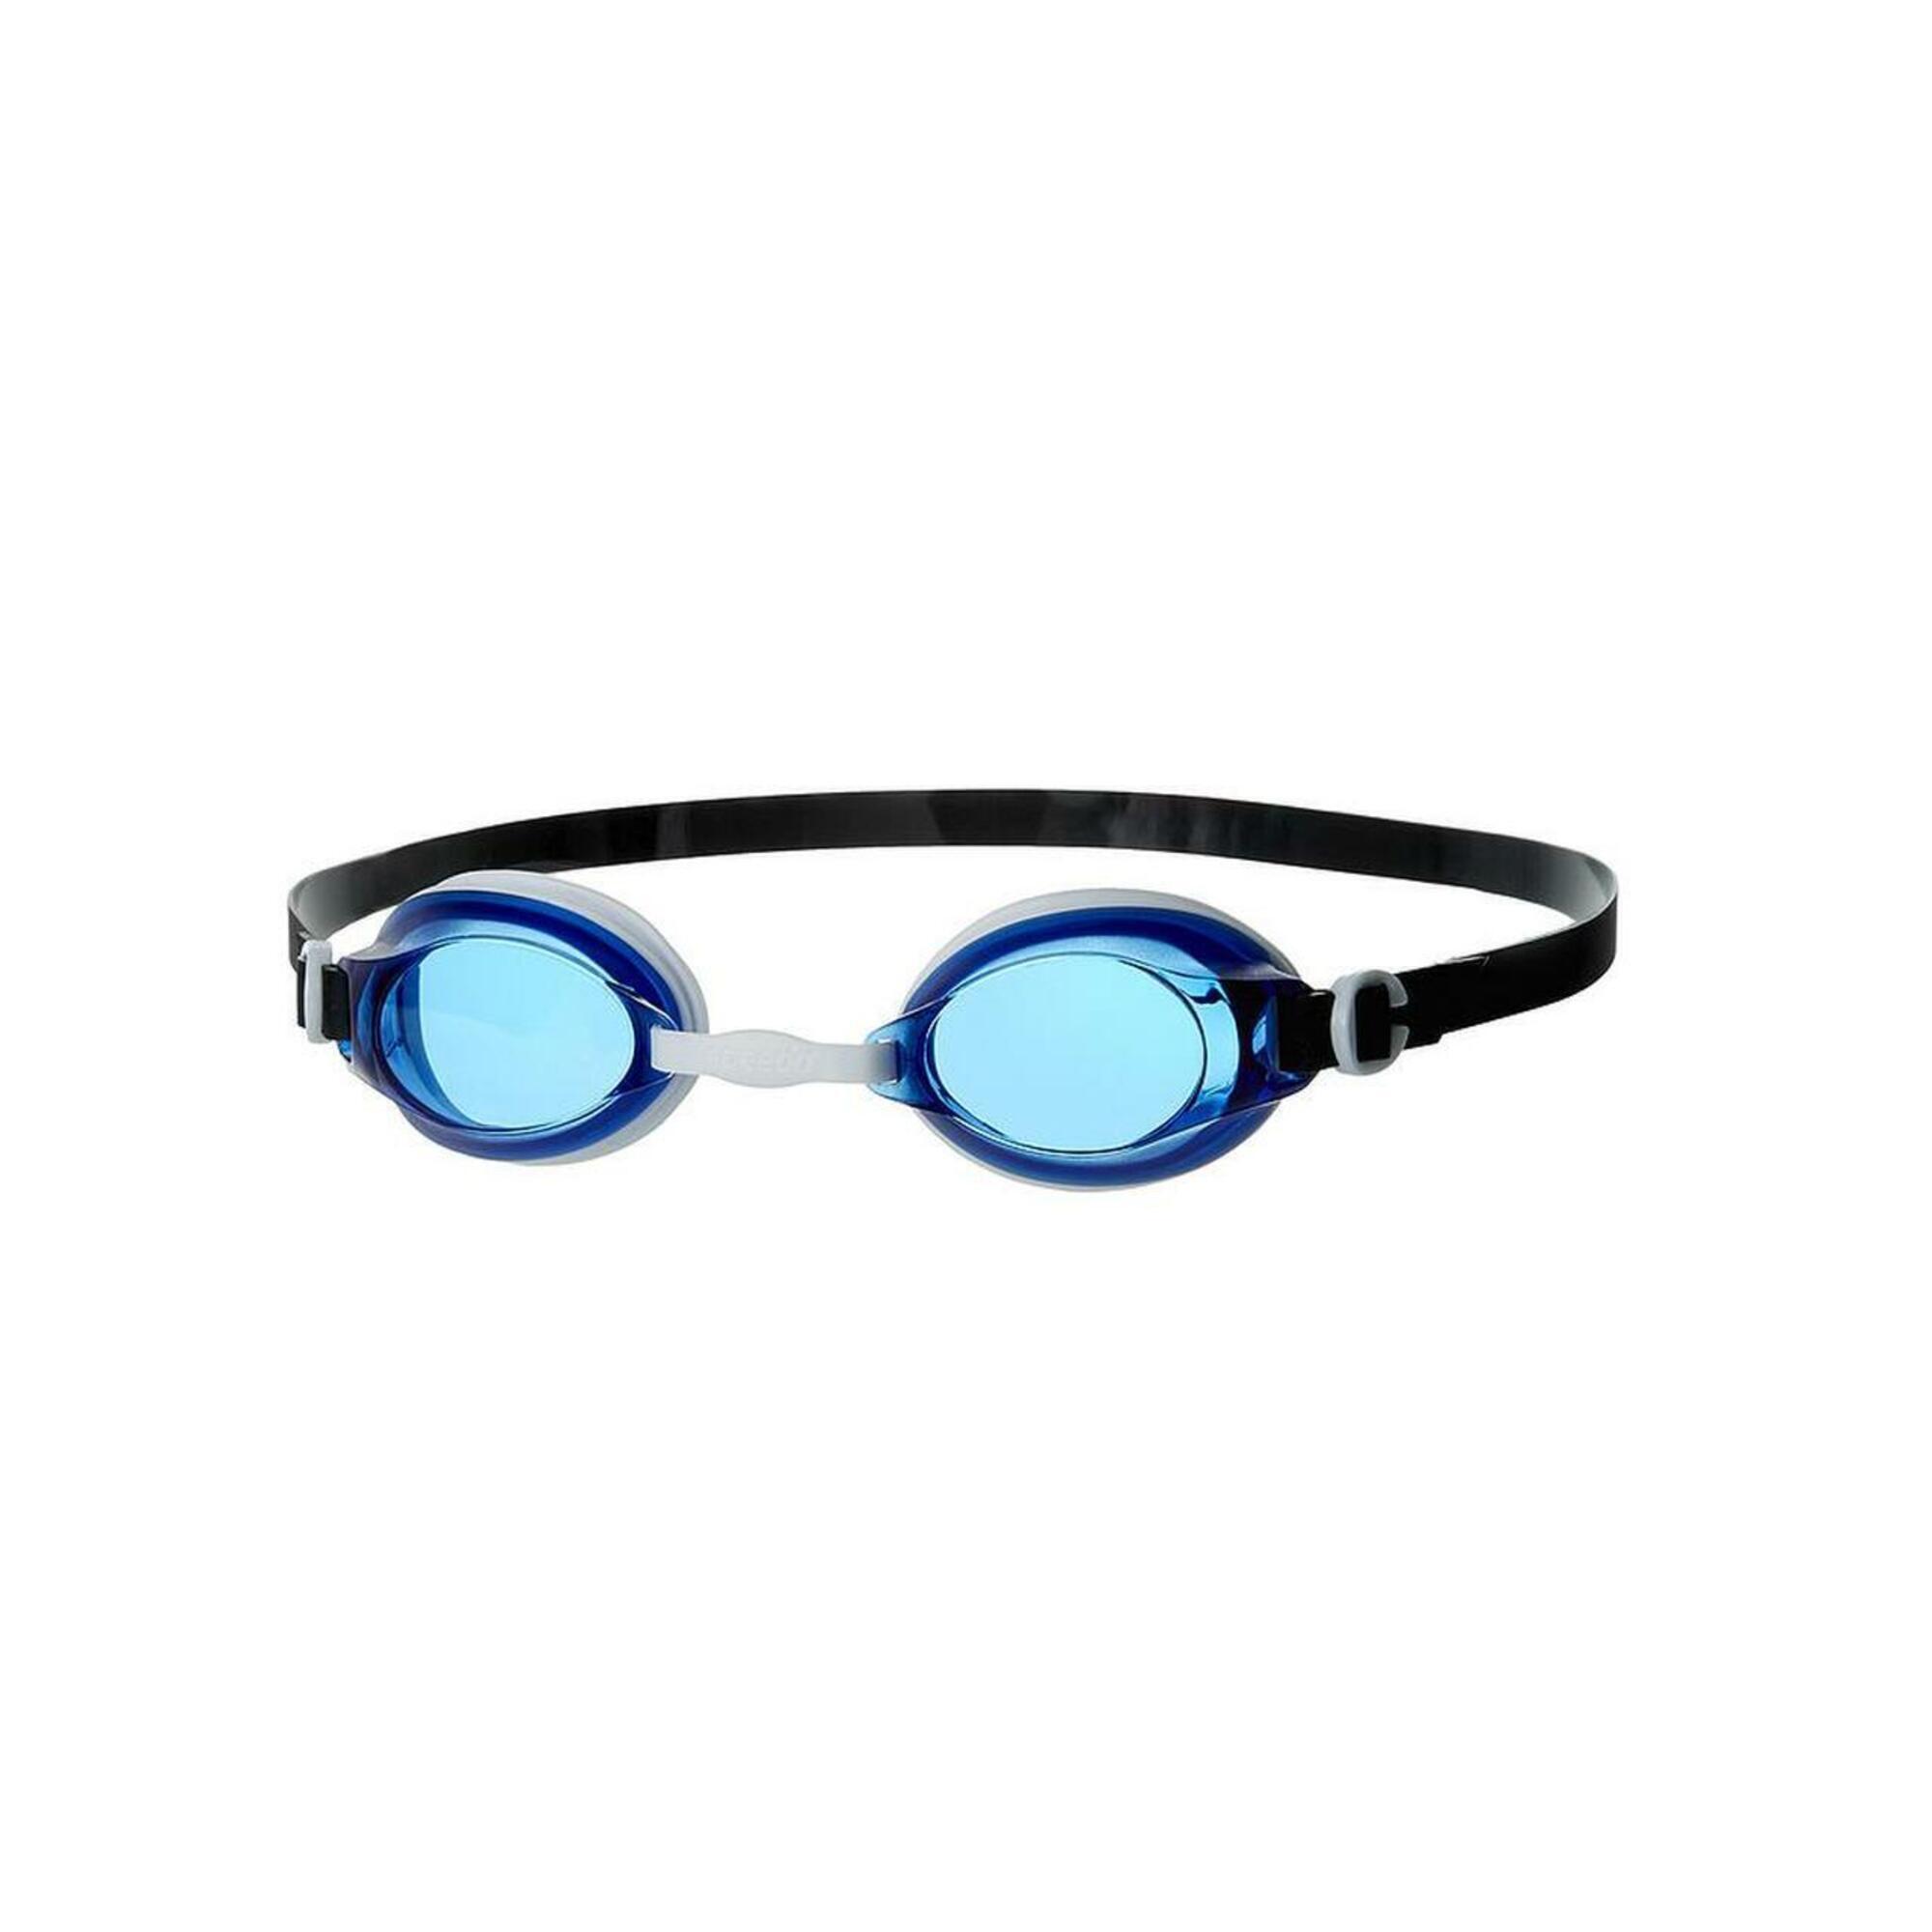 Unisex Adult Jet Swimming Goggles (Blue/White) 1/4